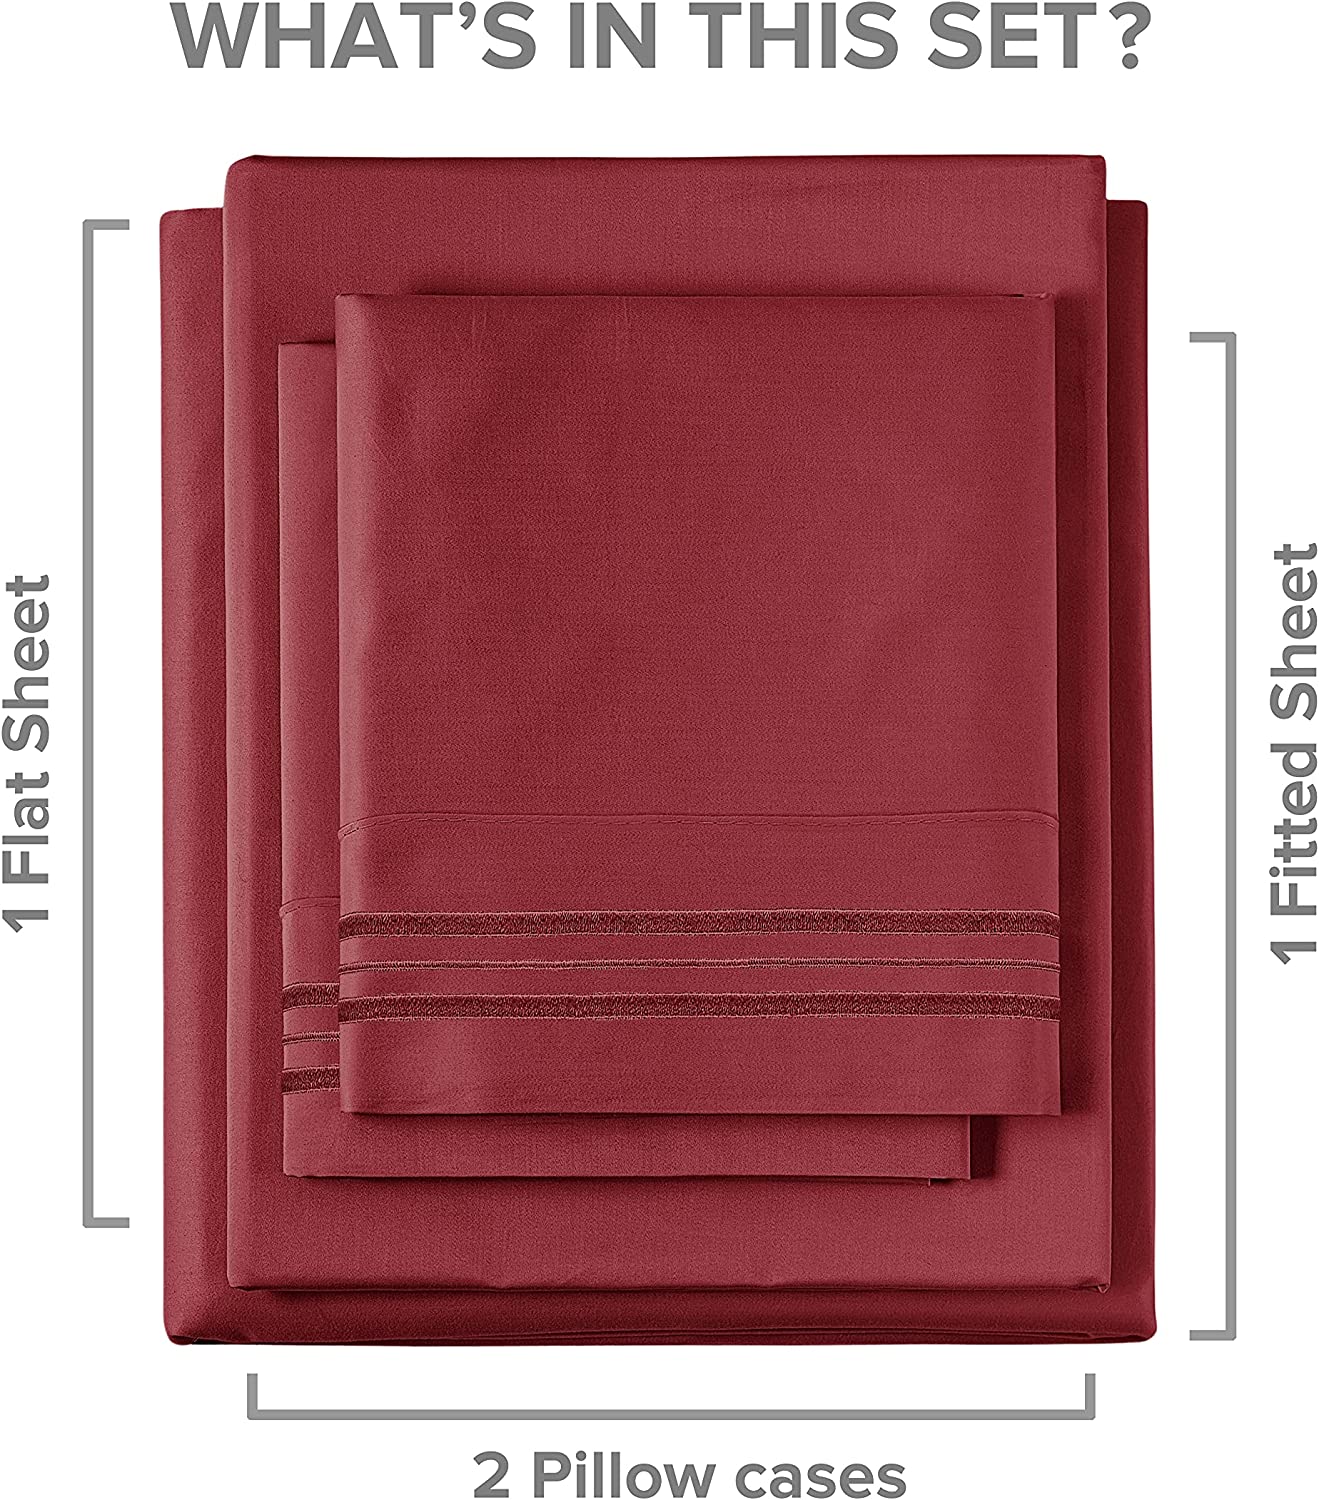 tes Cotton 400 Thread Count 4 Piece Deep Pocket Sheet Set - Burgundy